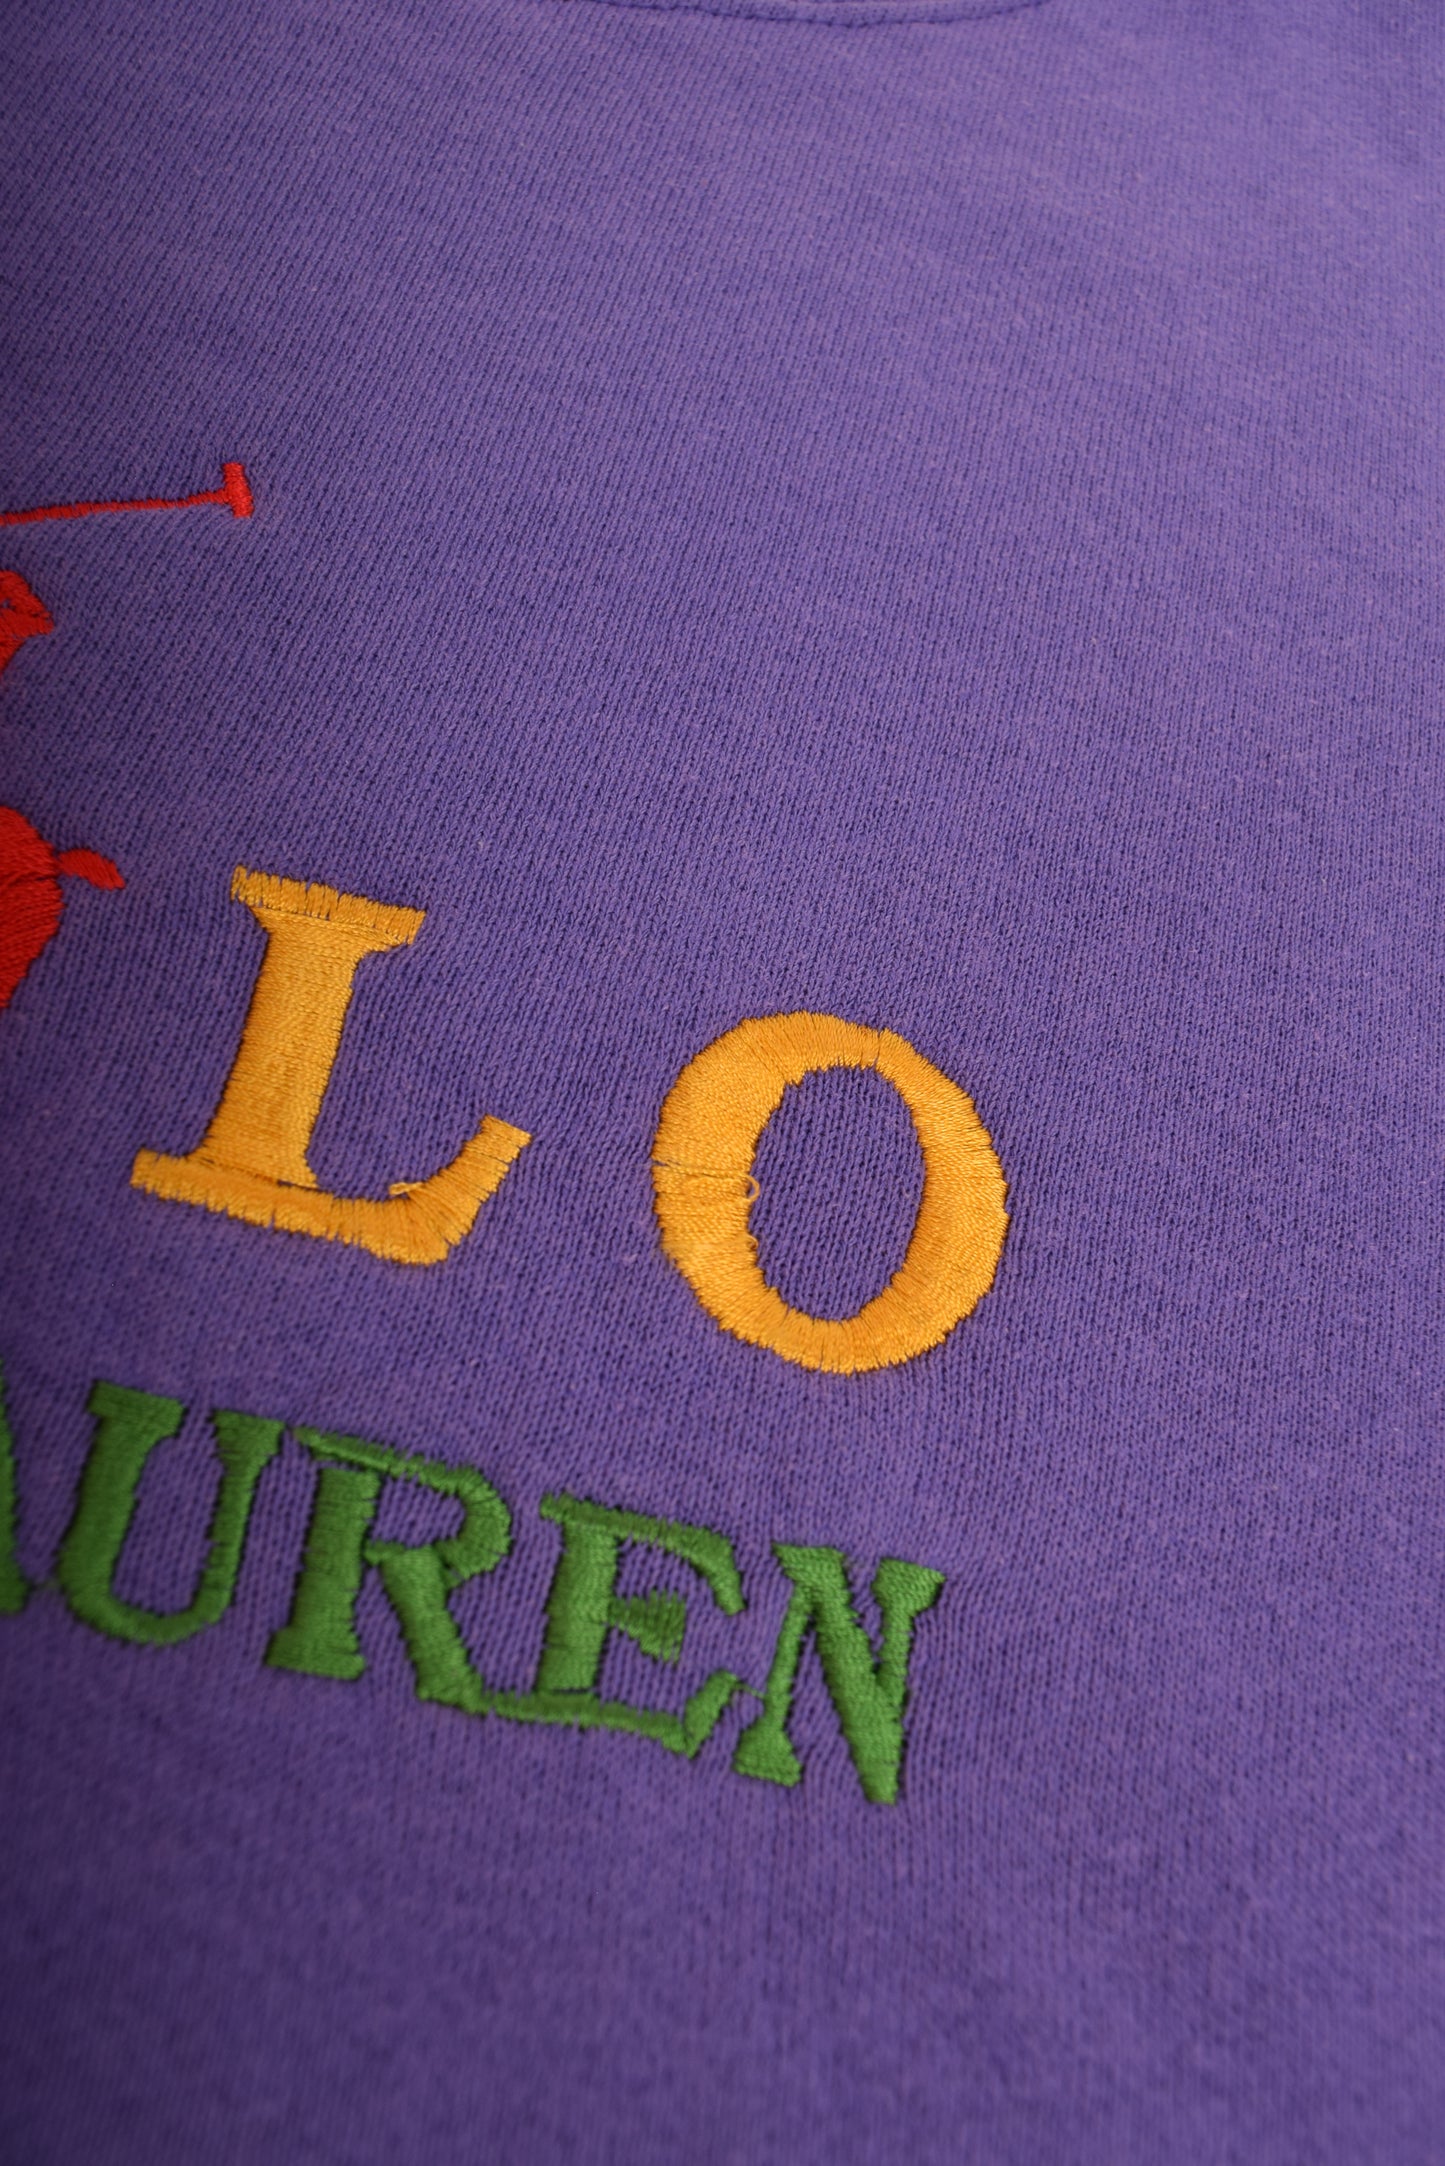 Vintage Ralph Lauren Polo Sweatshirt Size XL - XXL Purple Made in Italy